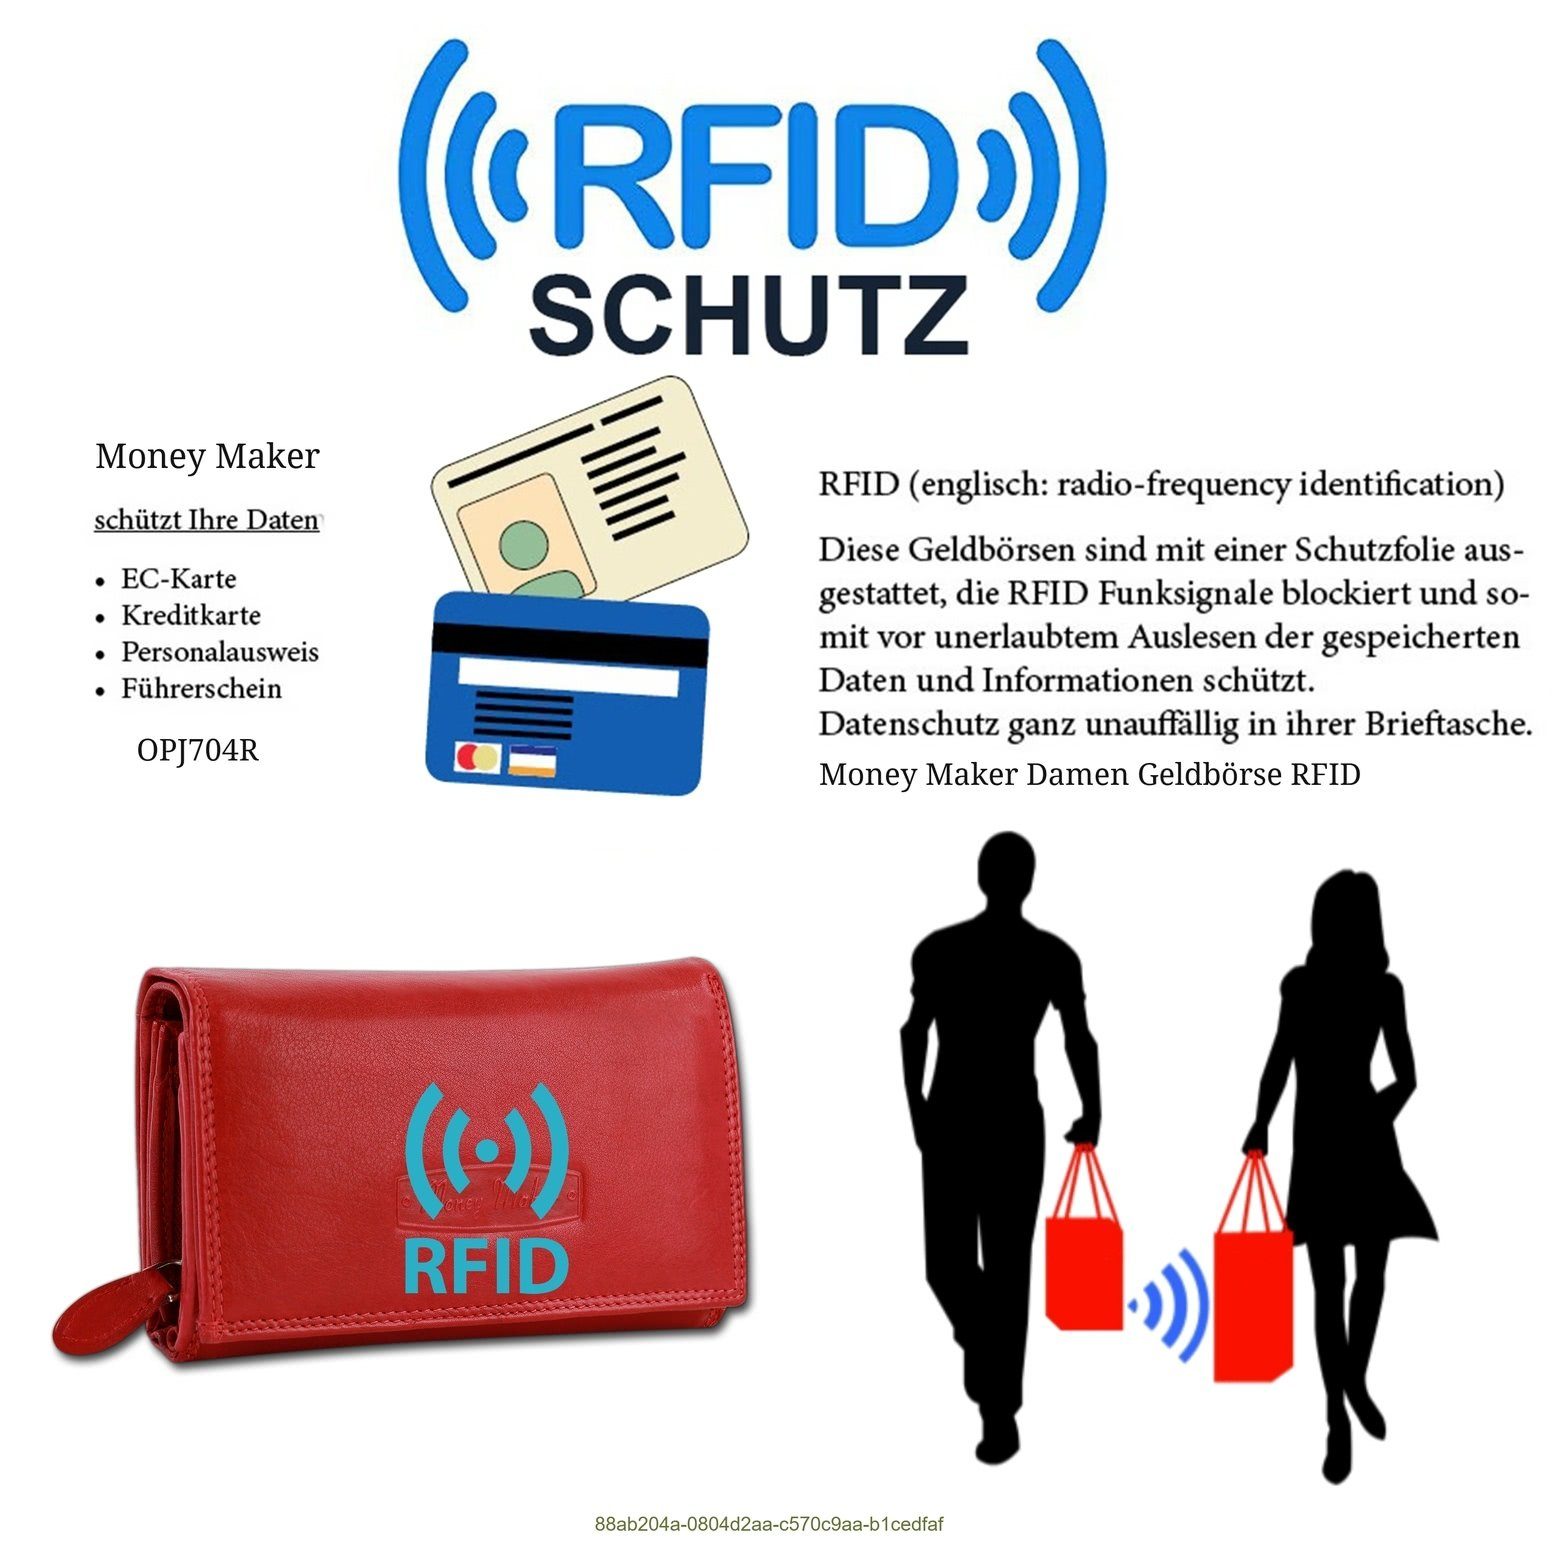 RFID Maker in (Kellnerbörse, Echtleder aus Kellnerbörse Börse Damen Maker 15,5cm rot, Money Money ca. Blocker Breite Kellnerbörse), Geldbörse Damen